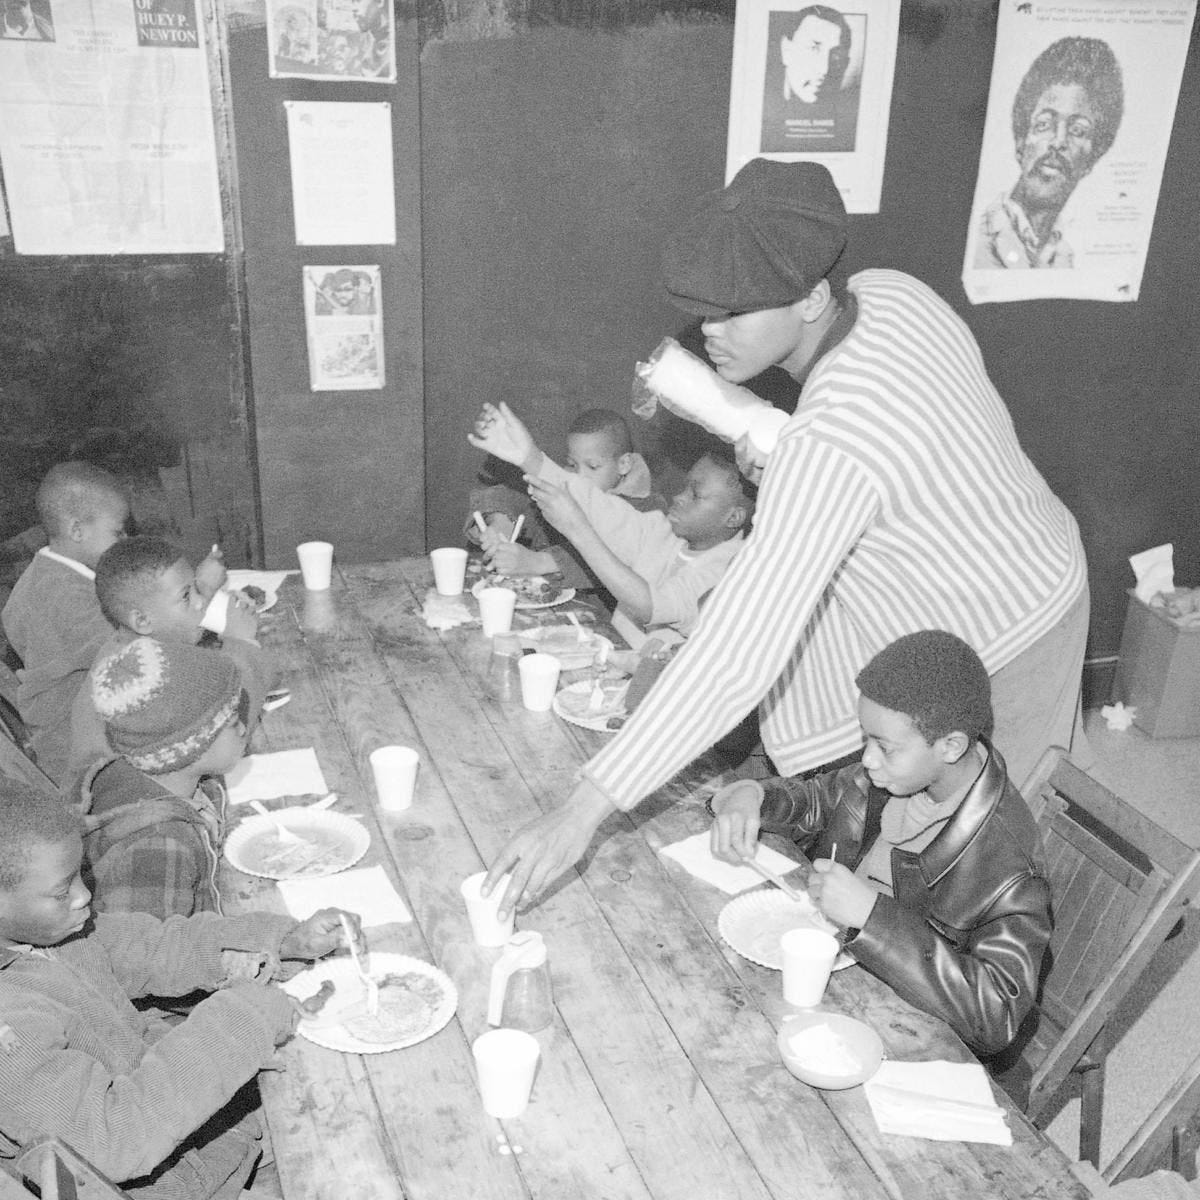 Brad Jones, member of the Philadelphia Black Panthers Organization, helping serve breakfast to youngsters. (Credit: Bill Ingraham/AP Photo)